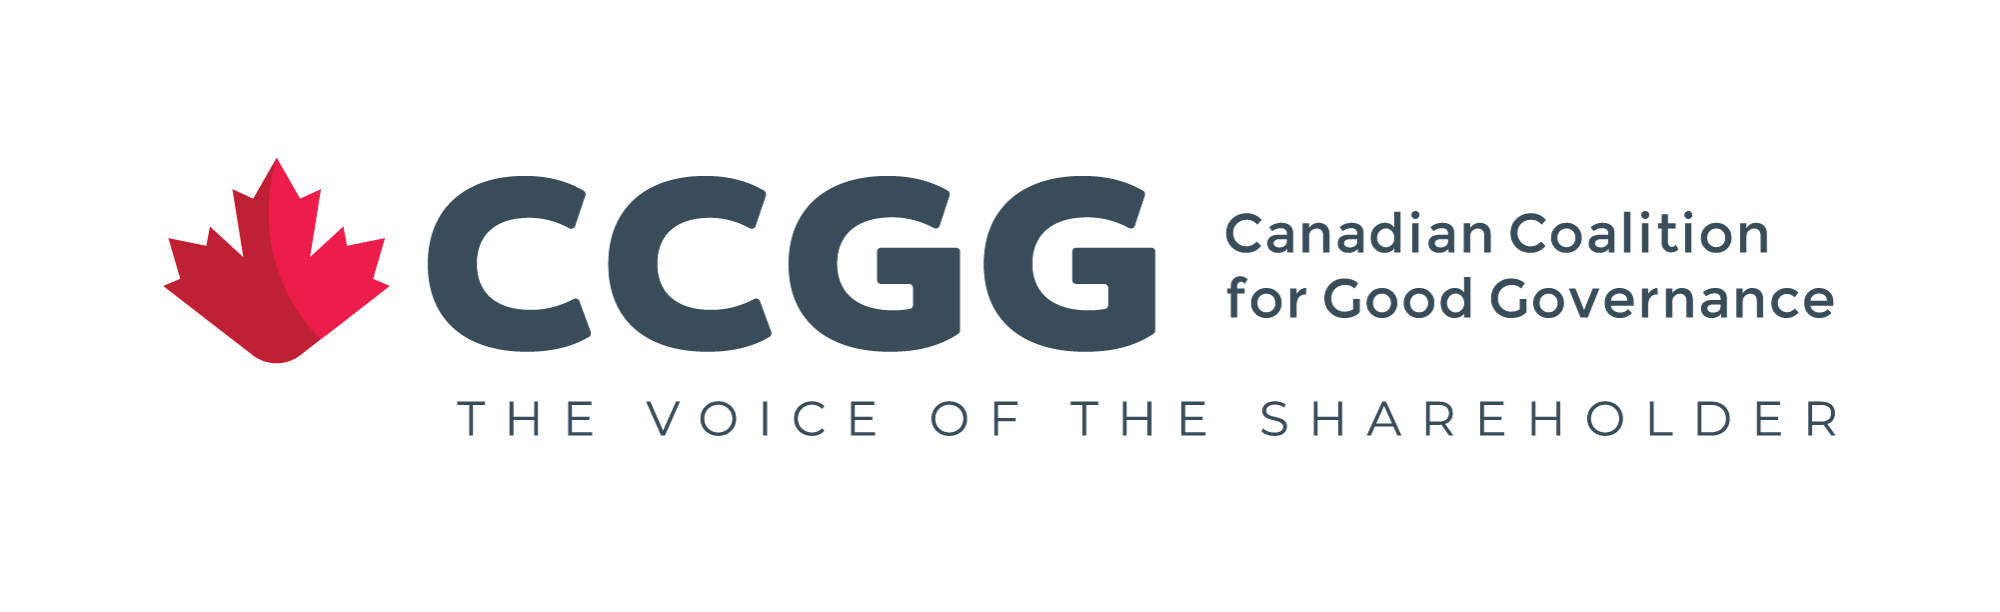 CCGG logo